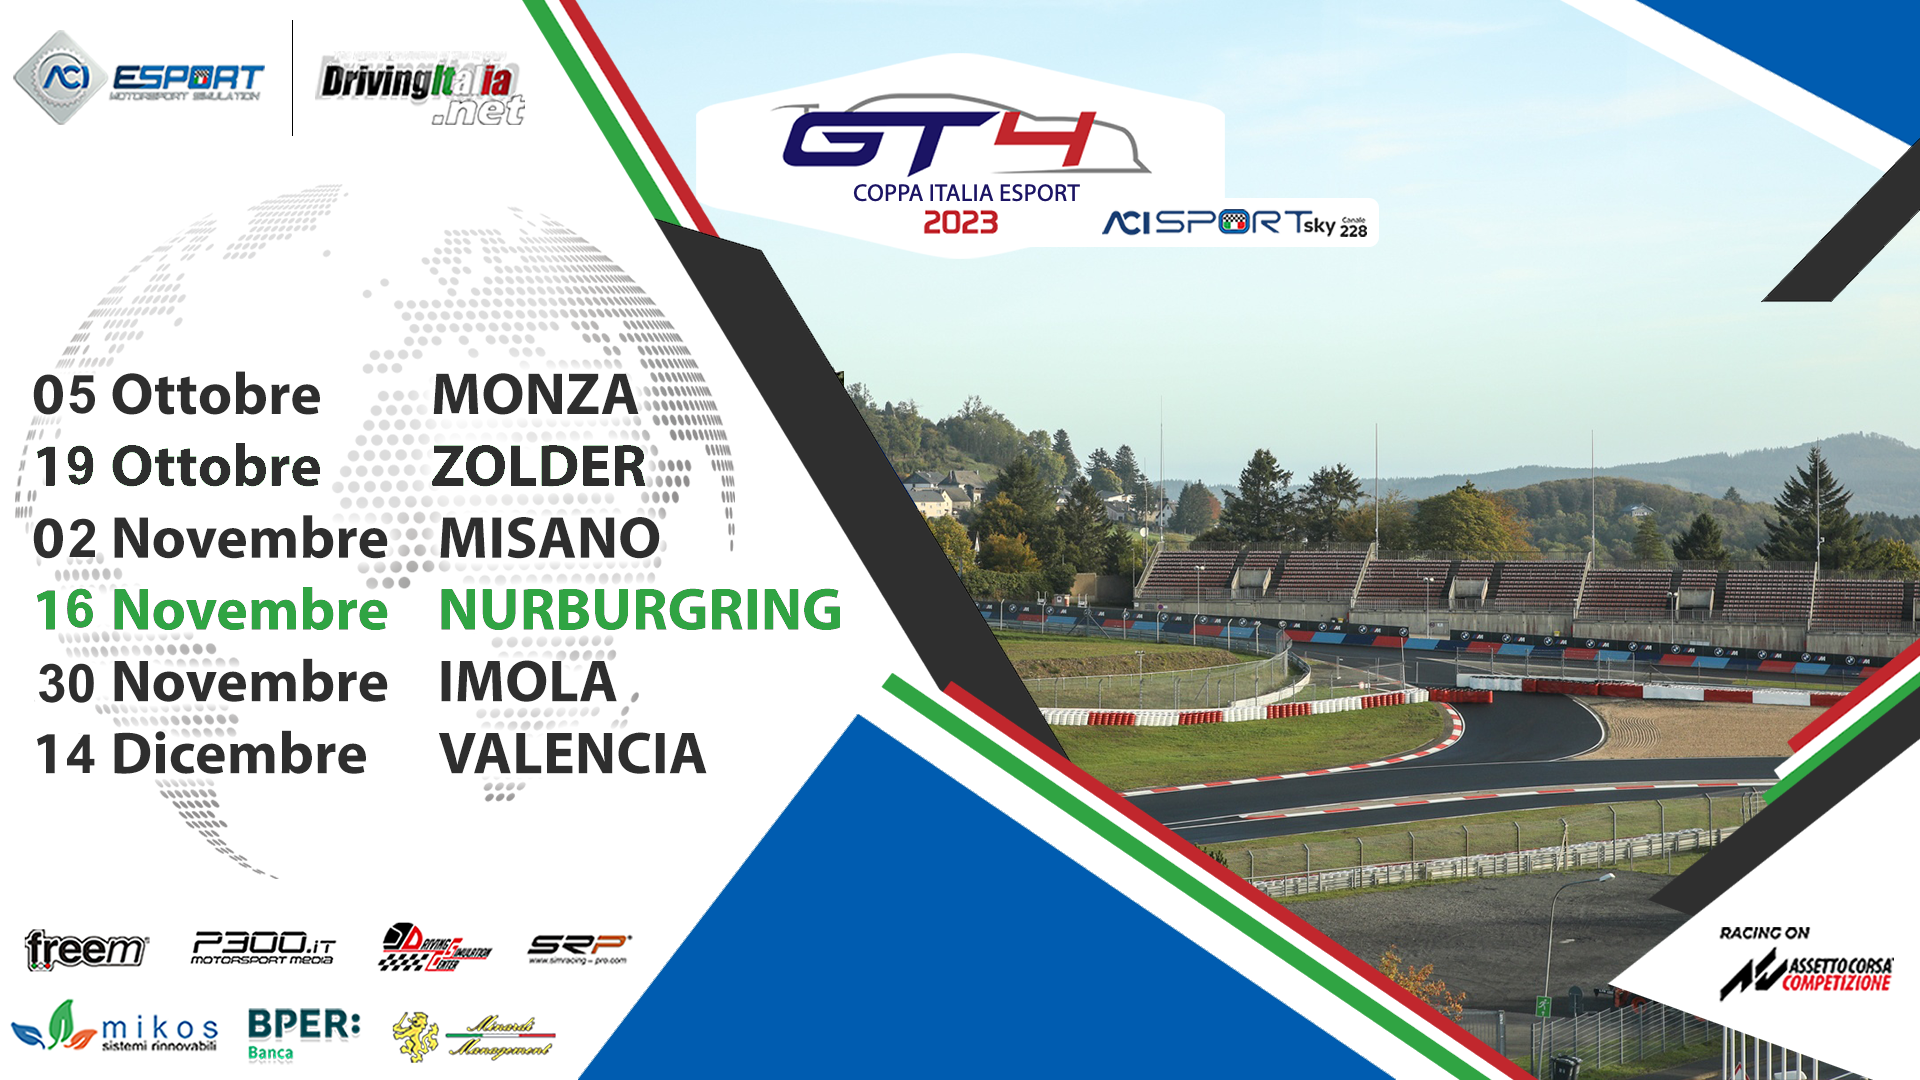 More information about "Coppa Italia GT4 Sprint ACI Esport: stasera (giovedi 16) il round 4 al Nurburgring"